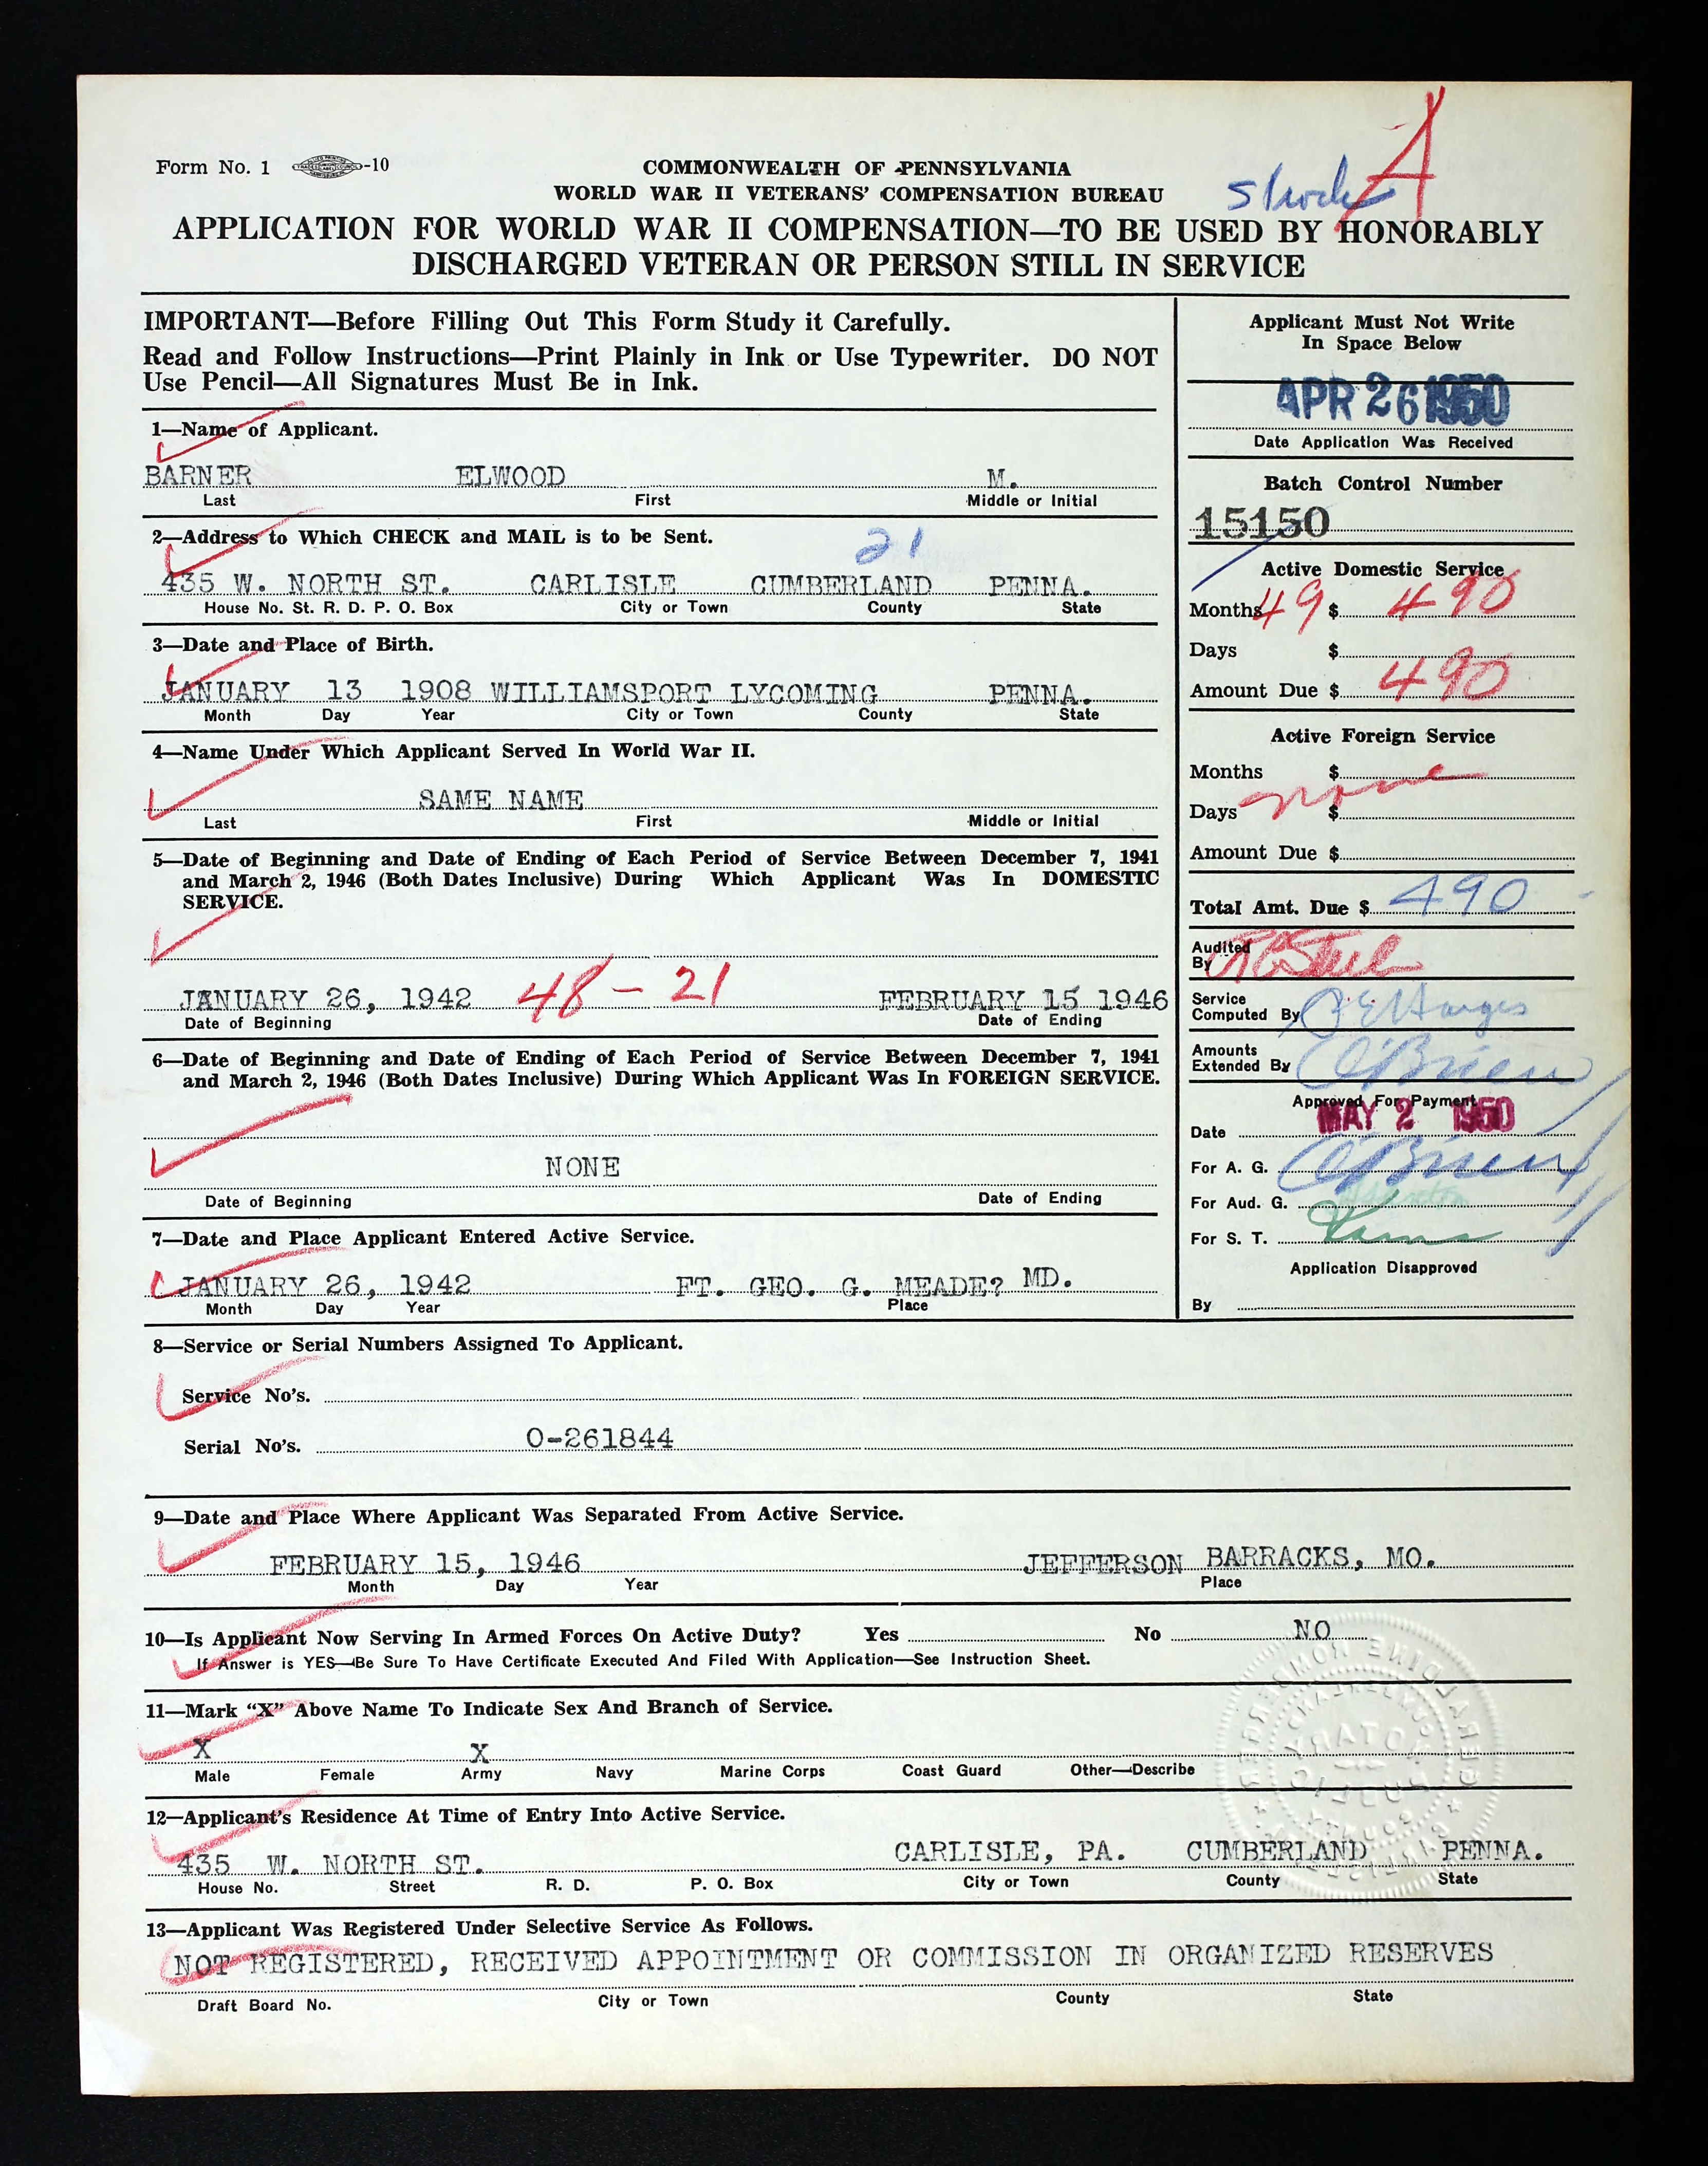 Elwood M. Barner, Pennsylvania, Veteran Compensation Application Files, WWII